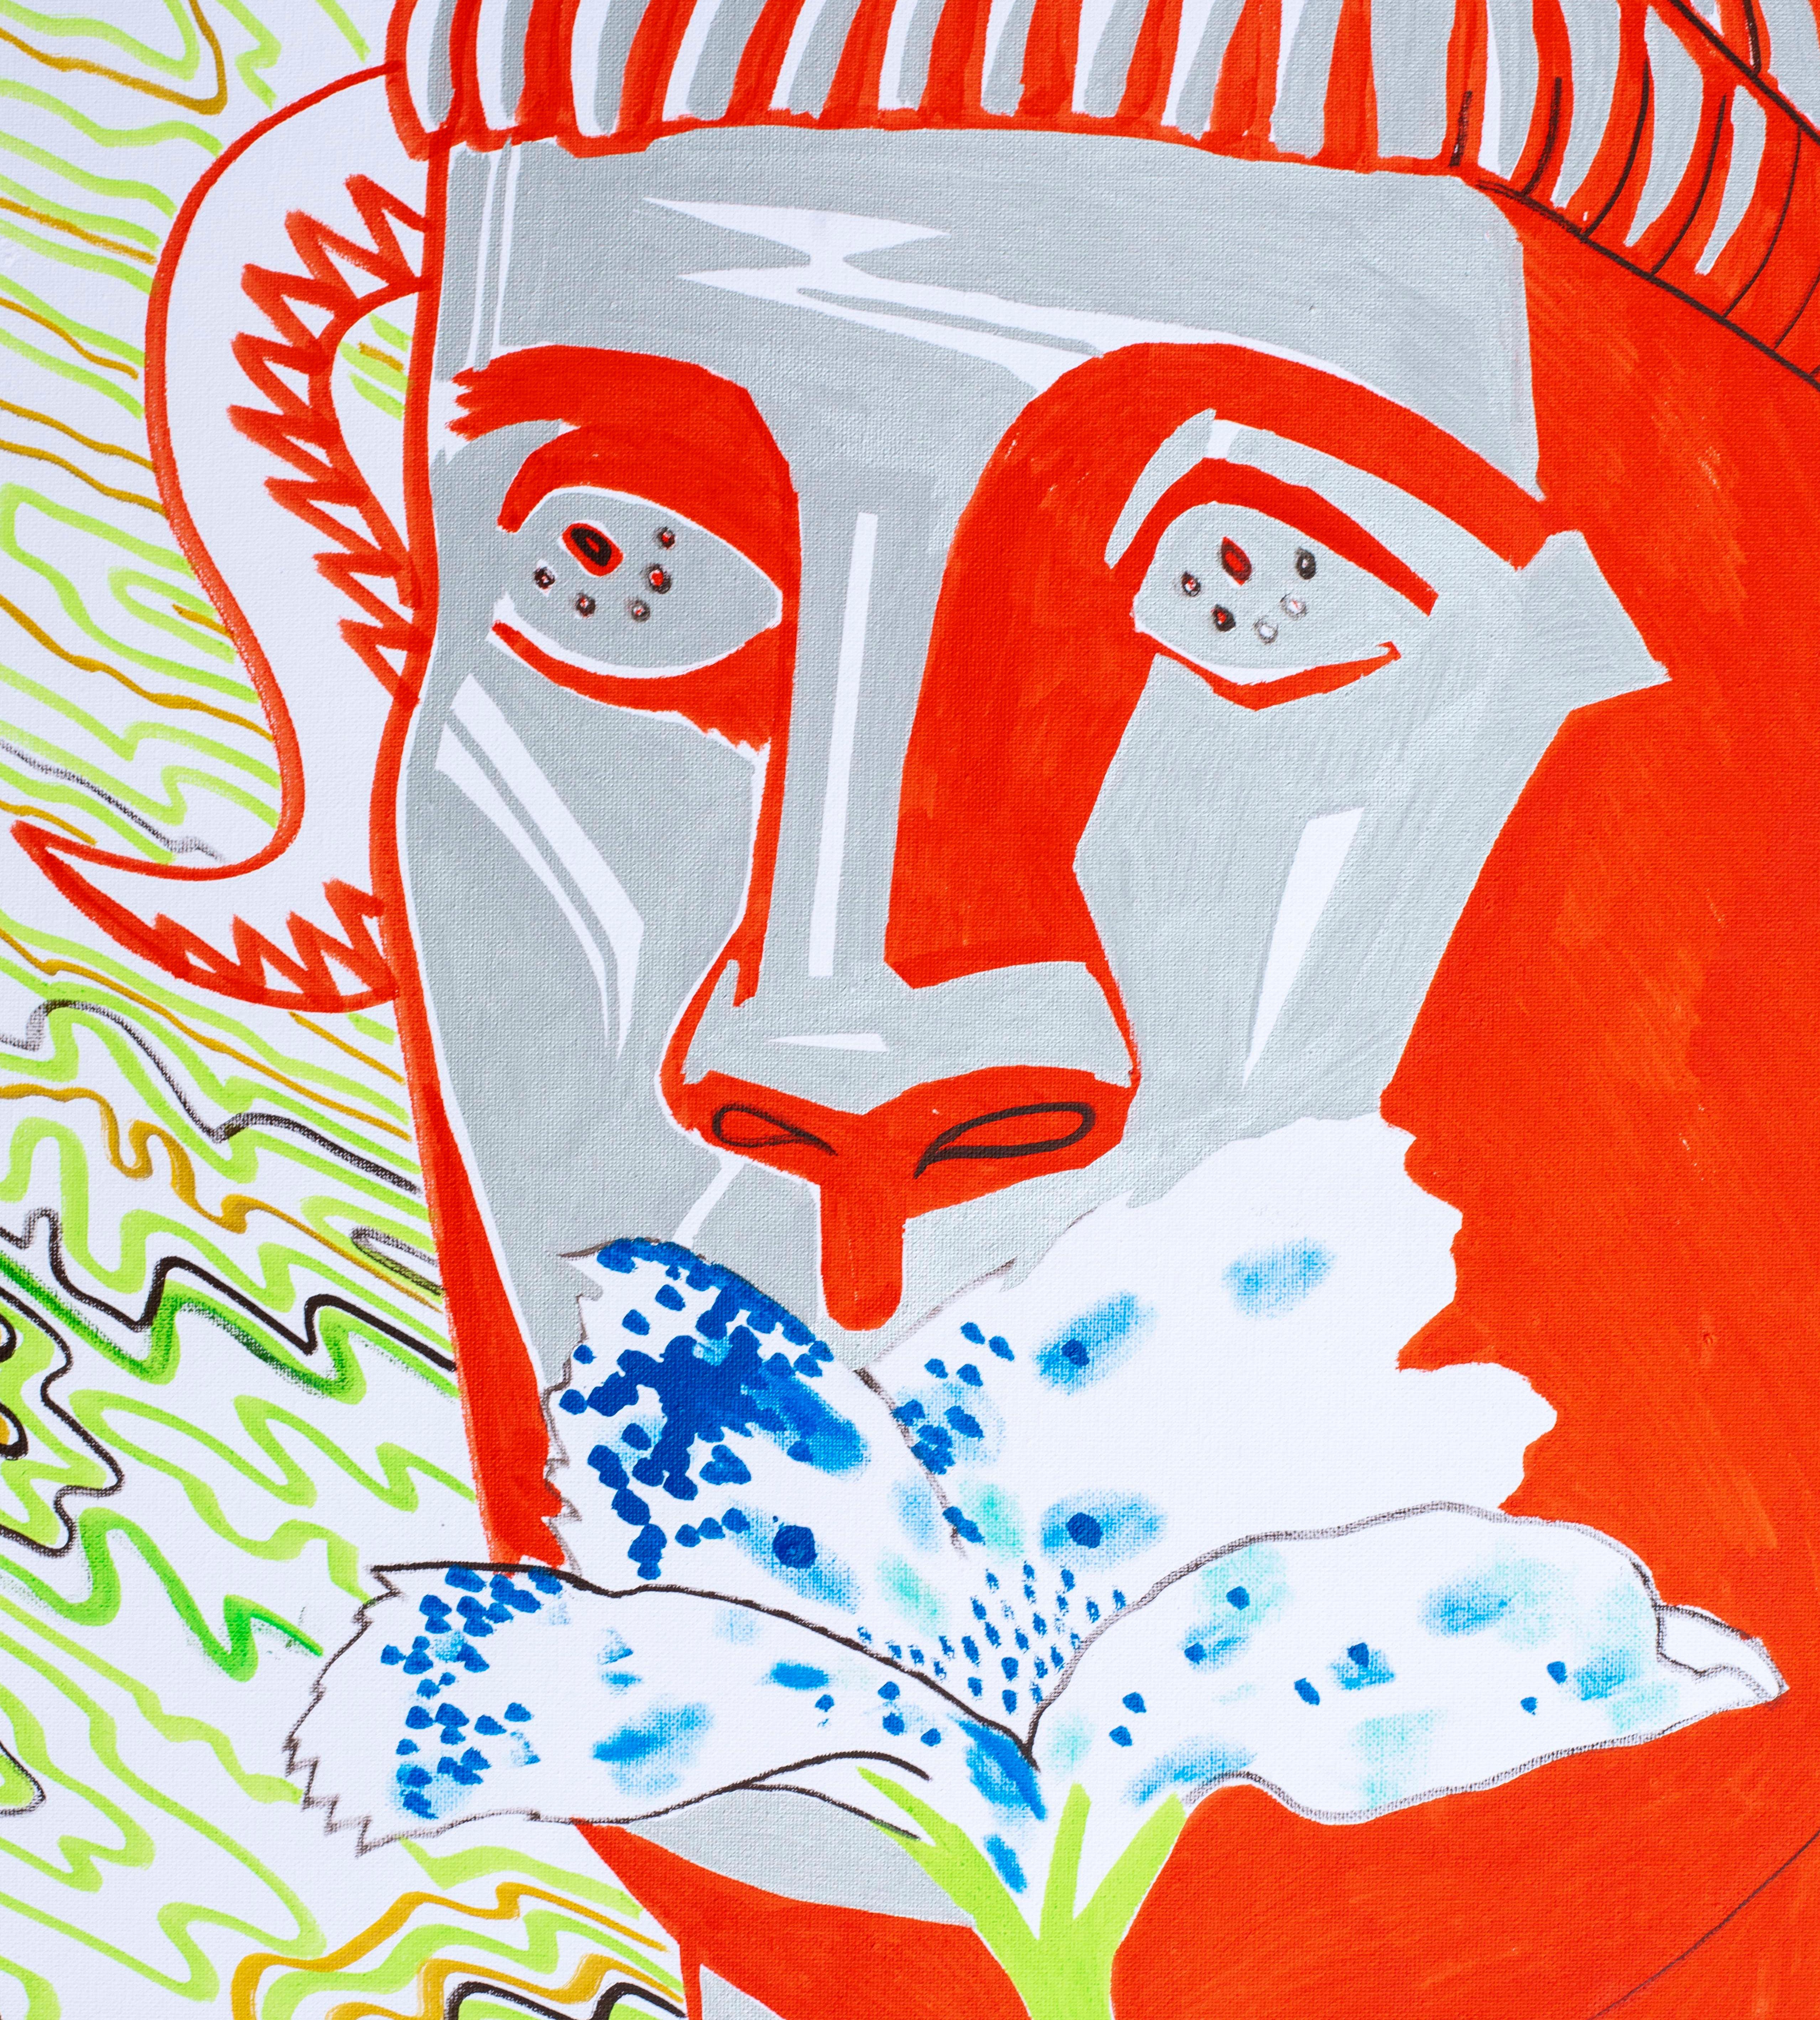 Mythologische Mythologie II (Faun) – 21. Jahrhundert, Rot, Blau, Blume, Mythologie, Zeitgenössische Kunst – Painting von Alexandru Rădvan